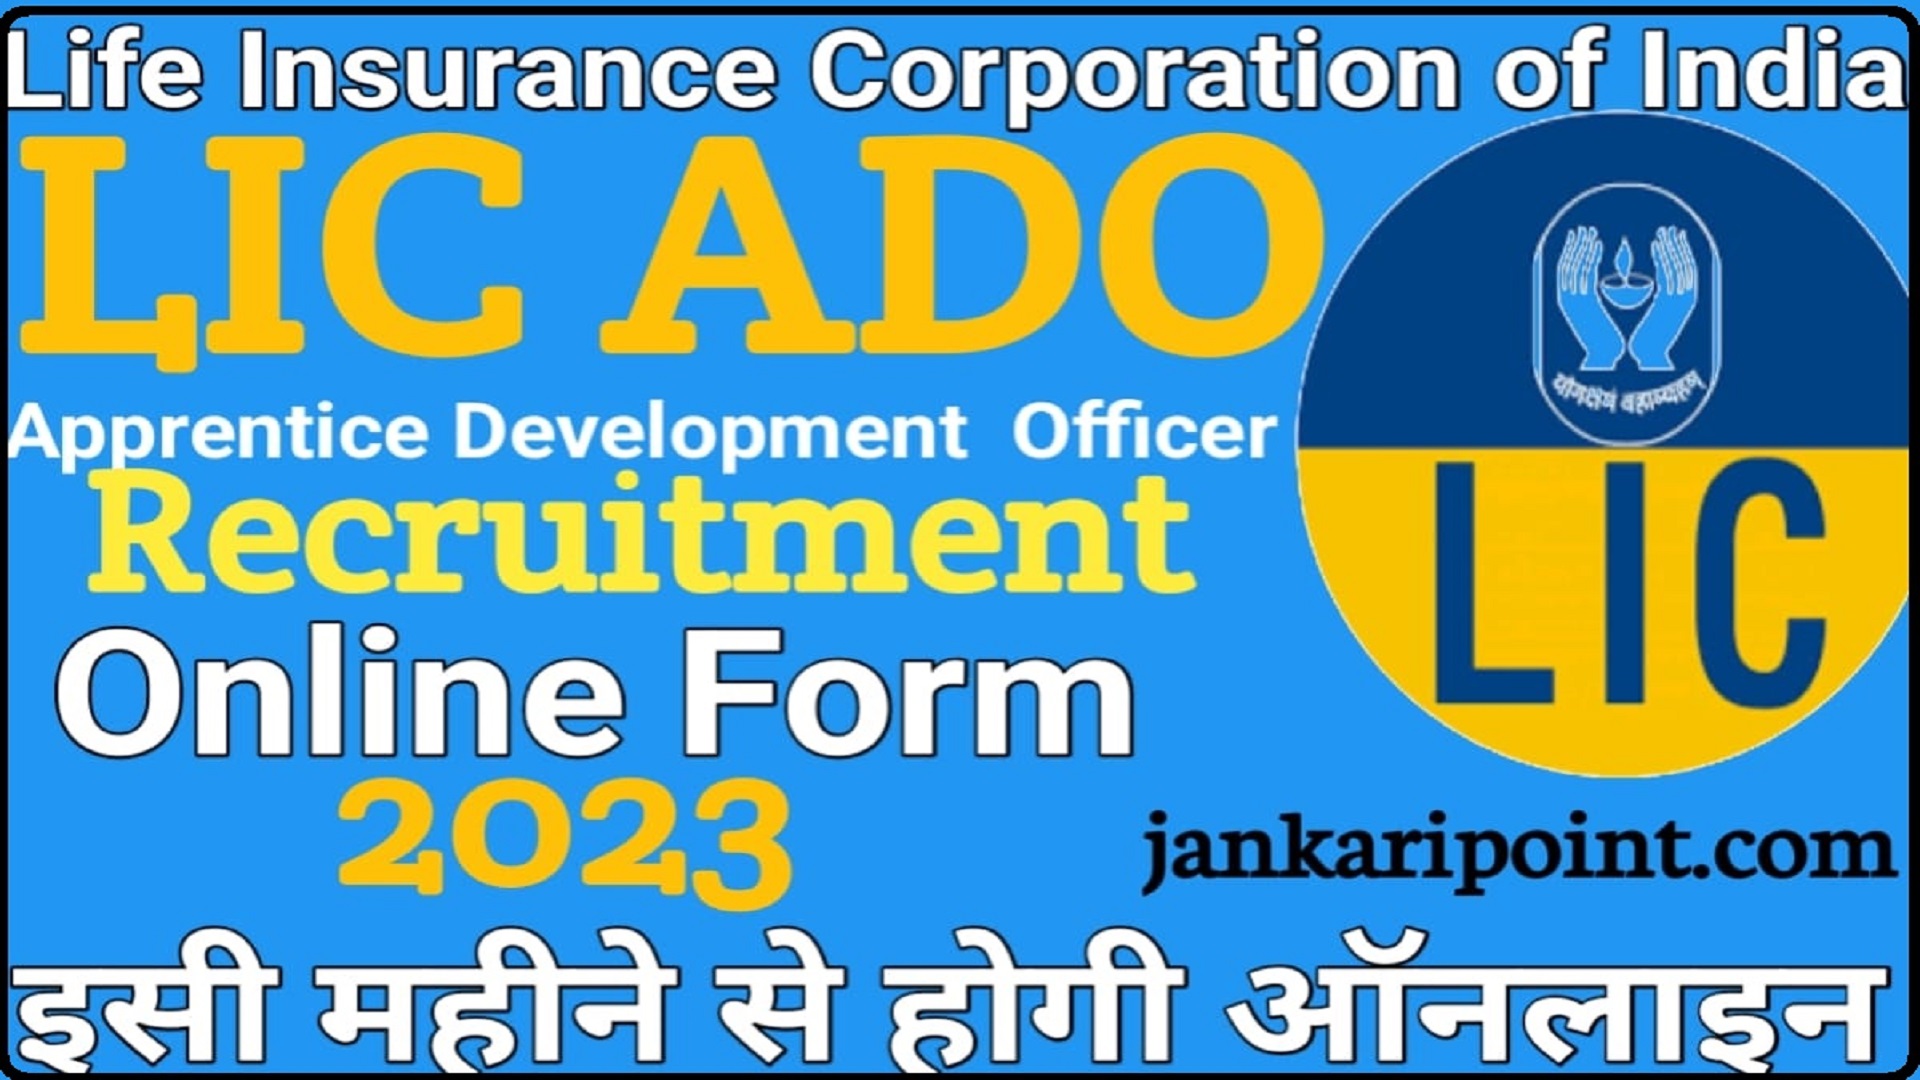 Life Insurance Corporation of India ADO Recruitment